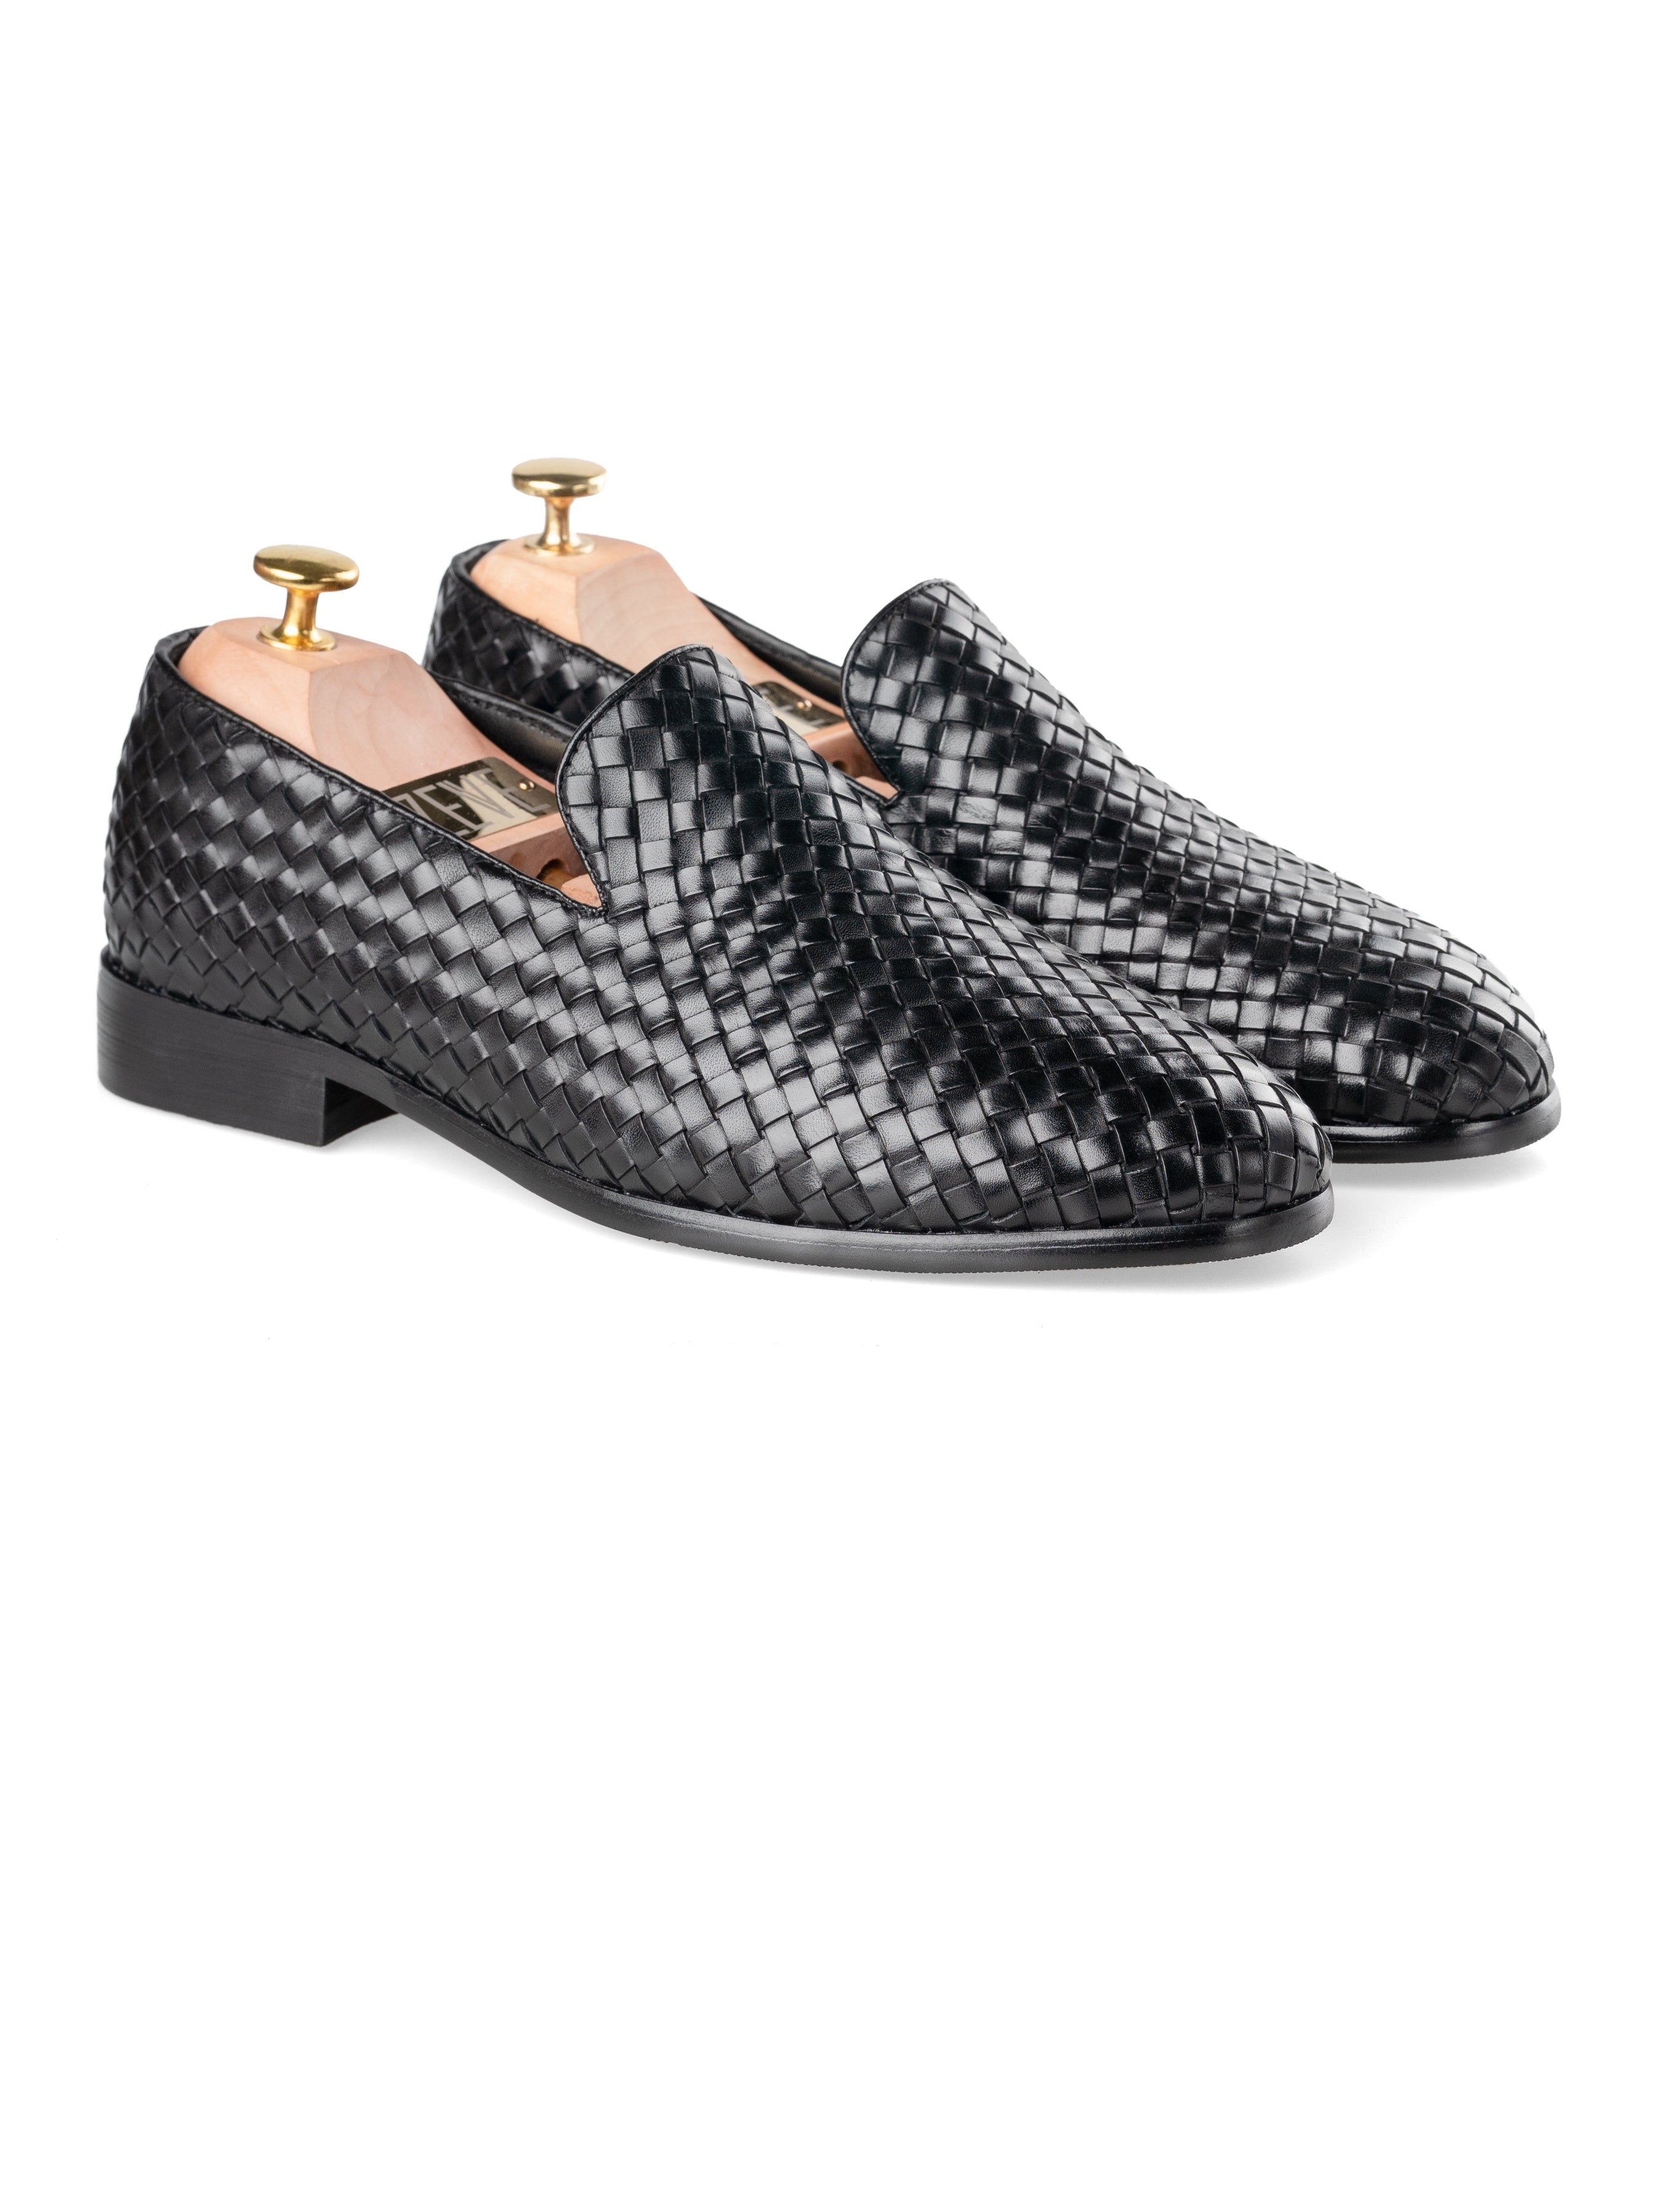 Loafer Slipper - Black Weave Leather